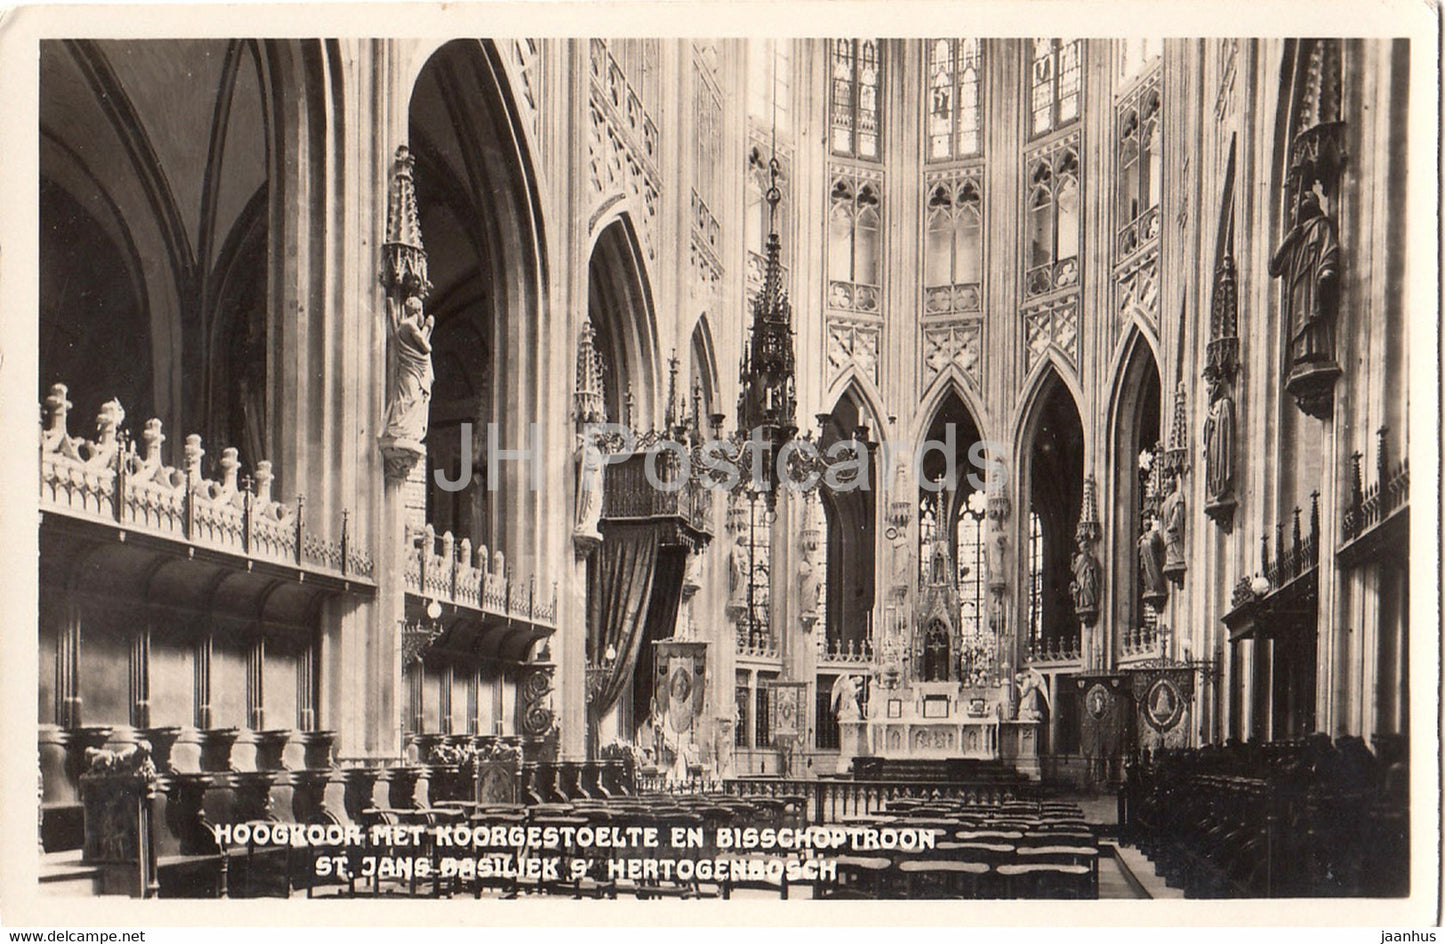 Hoogkoor met Koorgestoelte en Bisschoptroon St Jans Basiliek S Hertogenbosch - old postcard - Netherlands - unused - JH Postcards